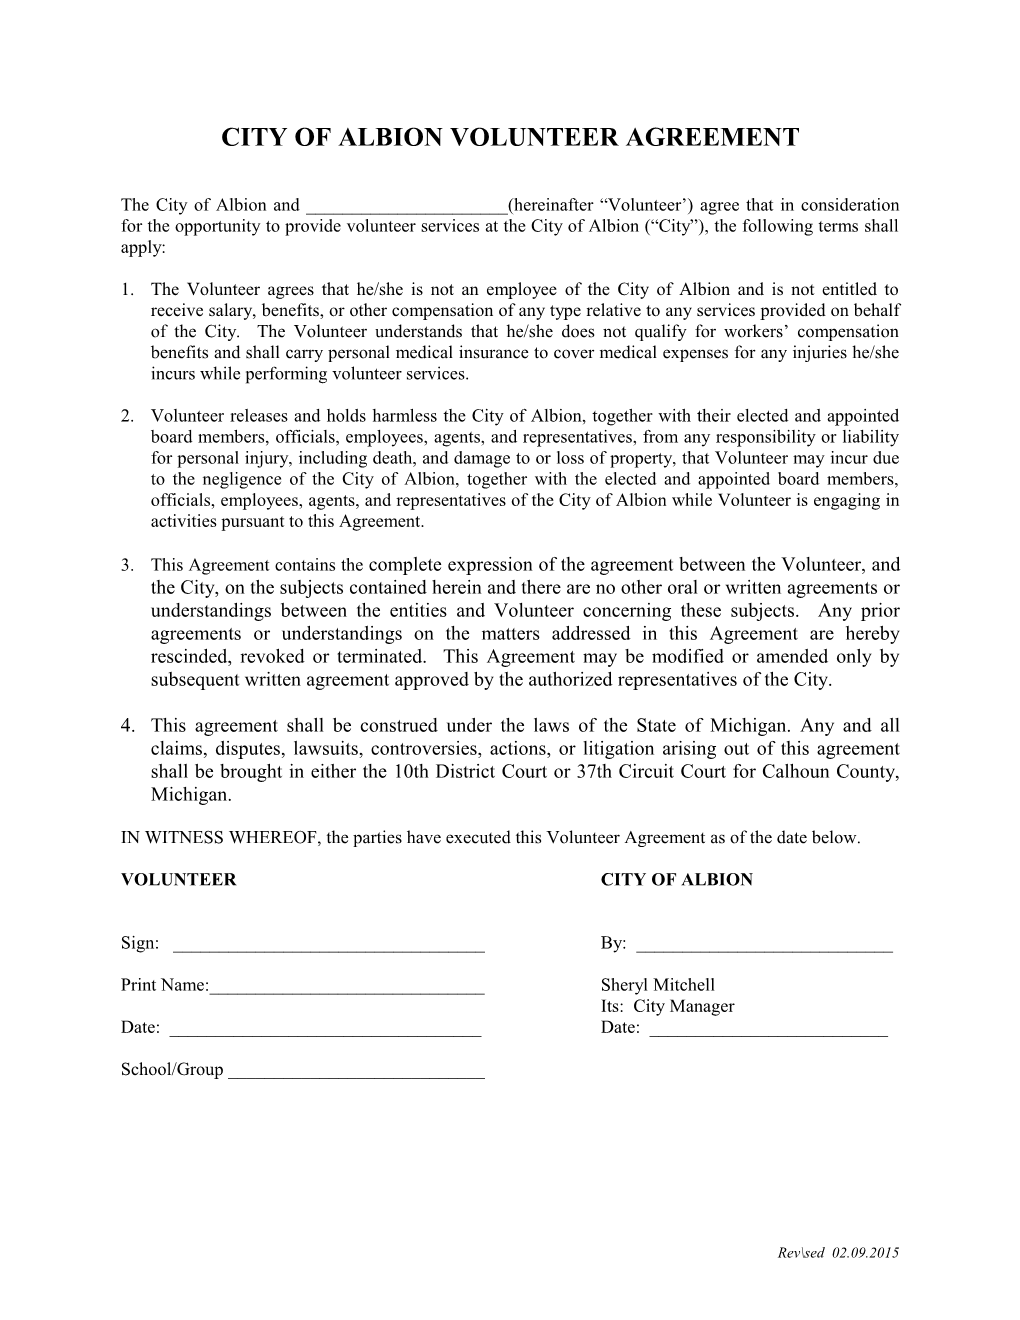 City of Albion Volunteer Agreement